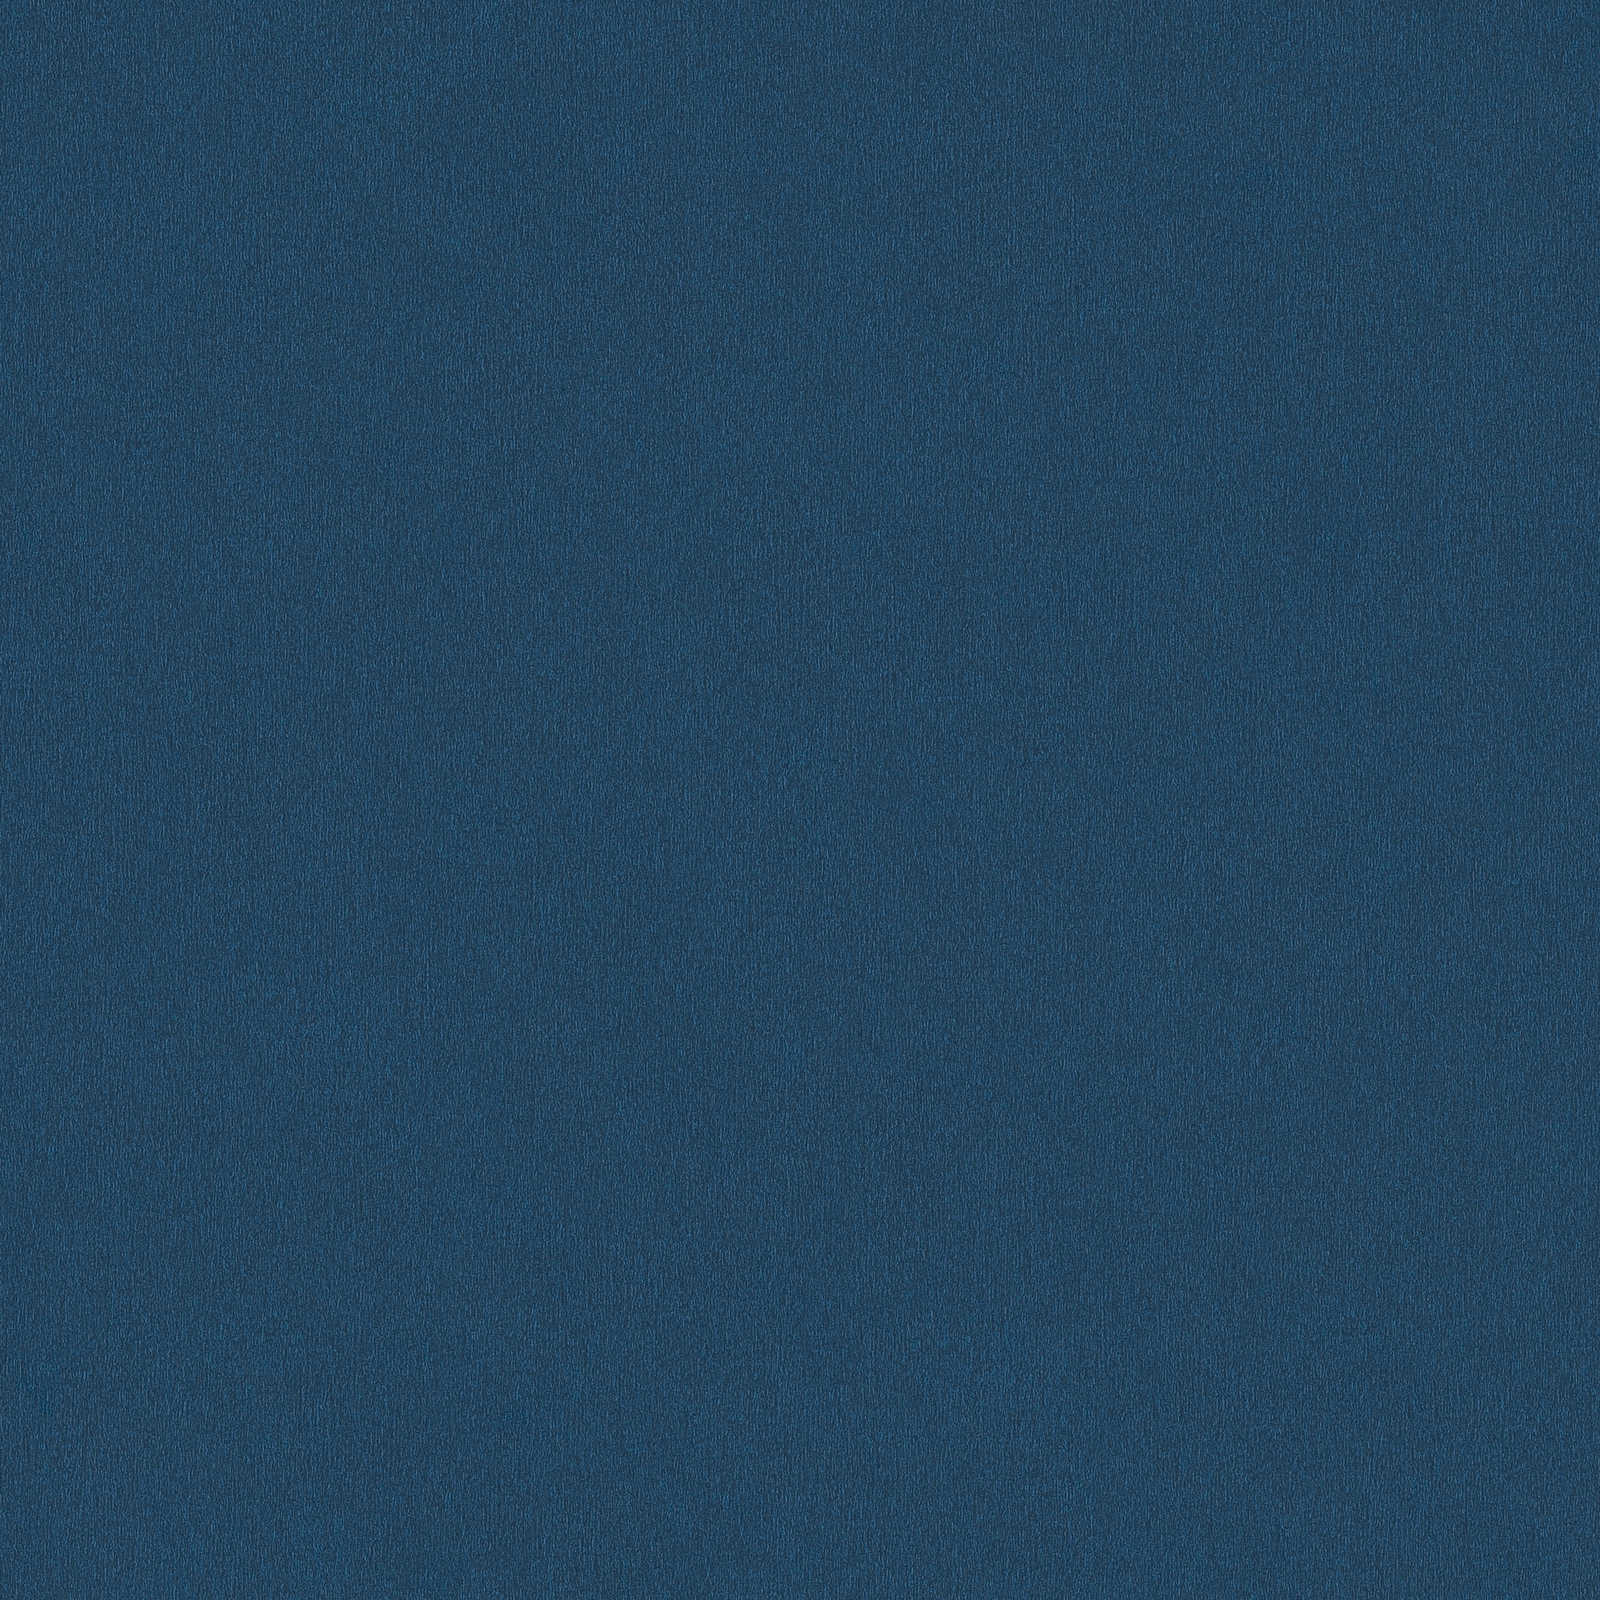 wallpaper dark blue, plain navy blue with colour hatching
